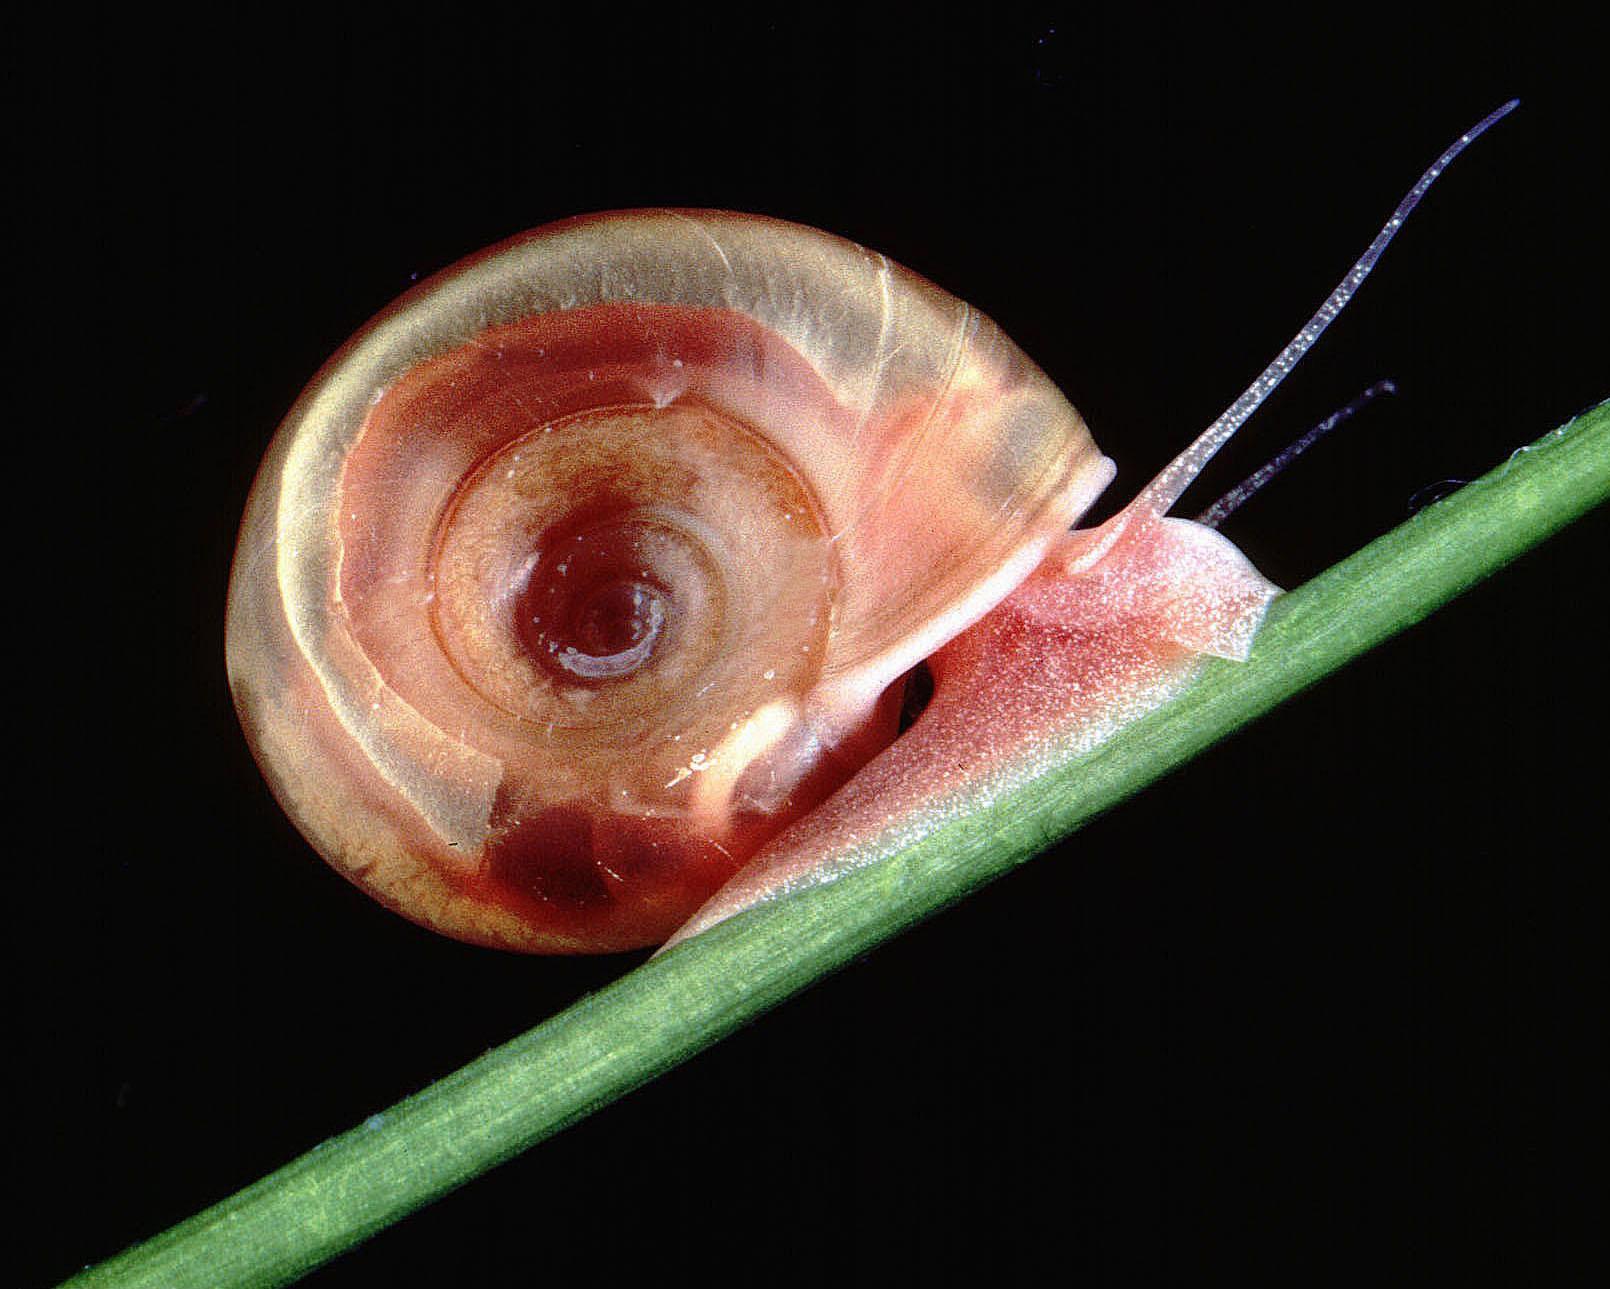 A freshwater snail